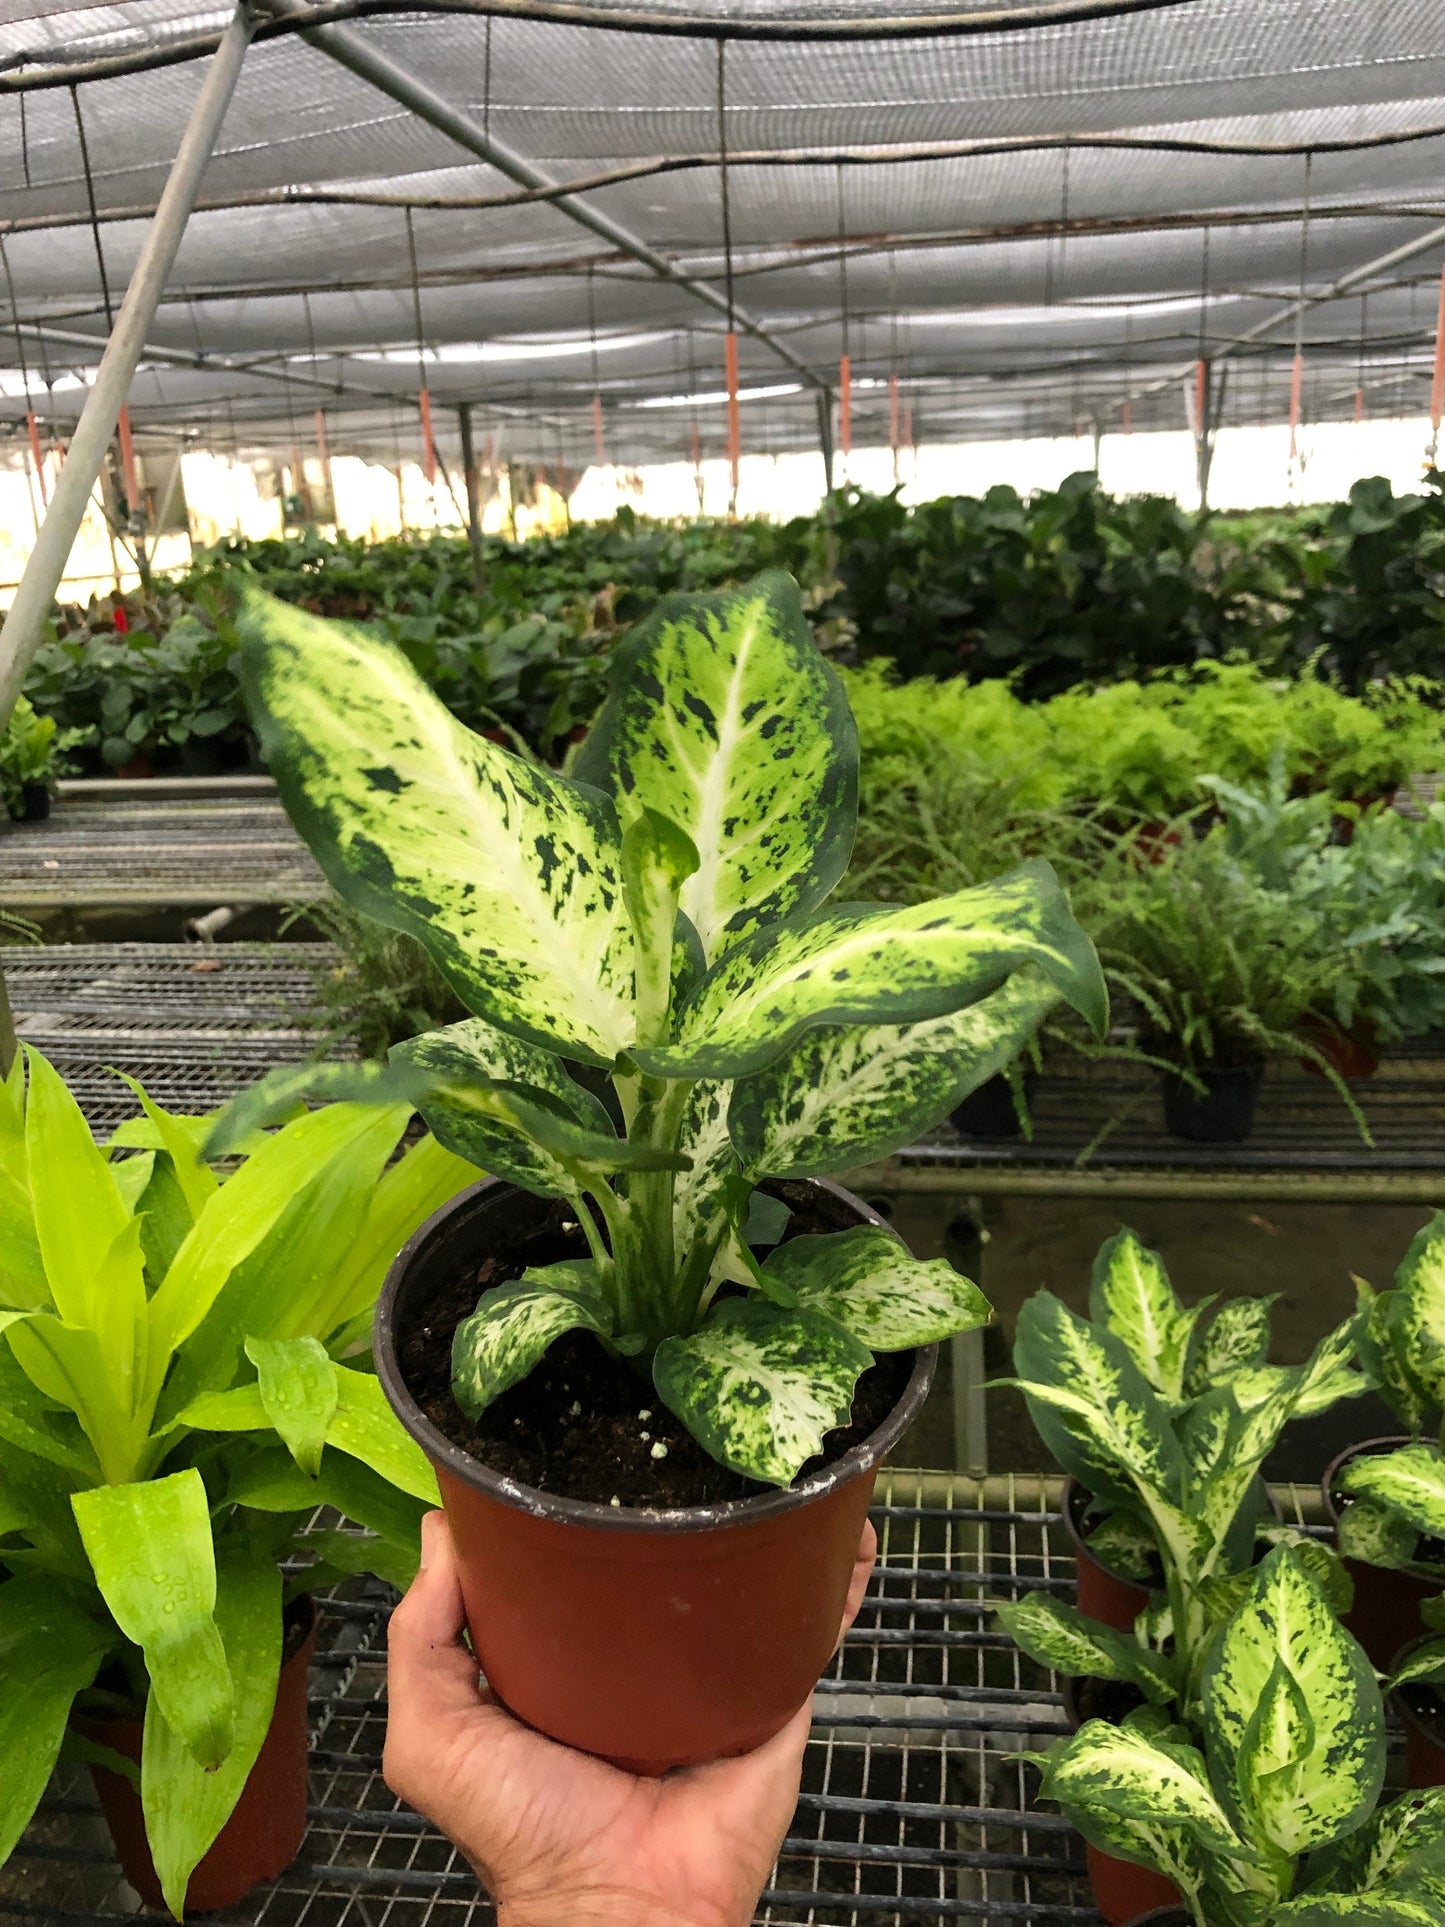 Dieffenbachia 'Amy' Dumb Cane- Large, Vibrant Variegated & Colorful Leaves, Low Light Tolerant Plant - Tropical Houseplant (6" Pot)